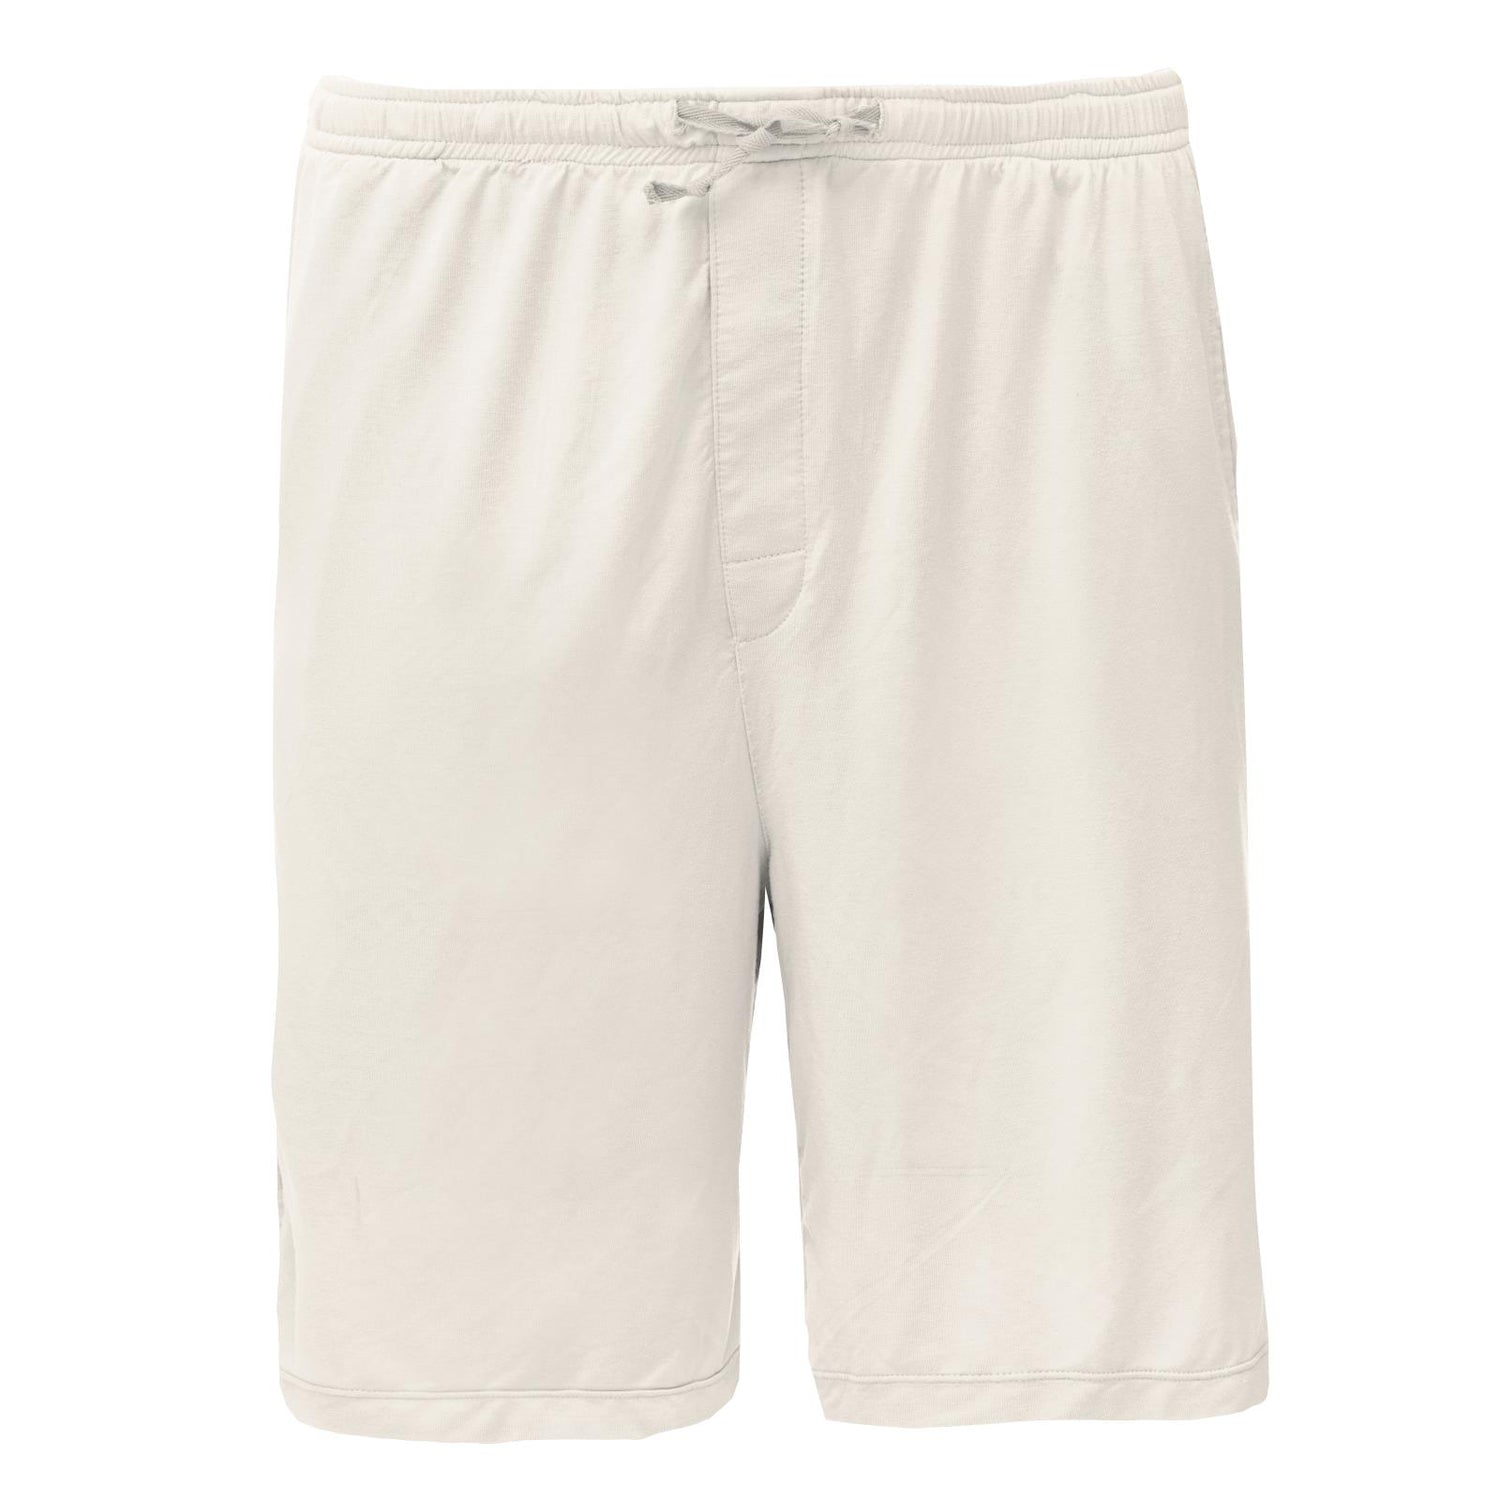 Men's Lounge Shorts in Natural